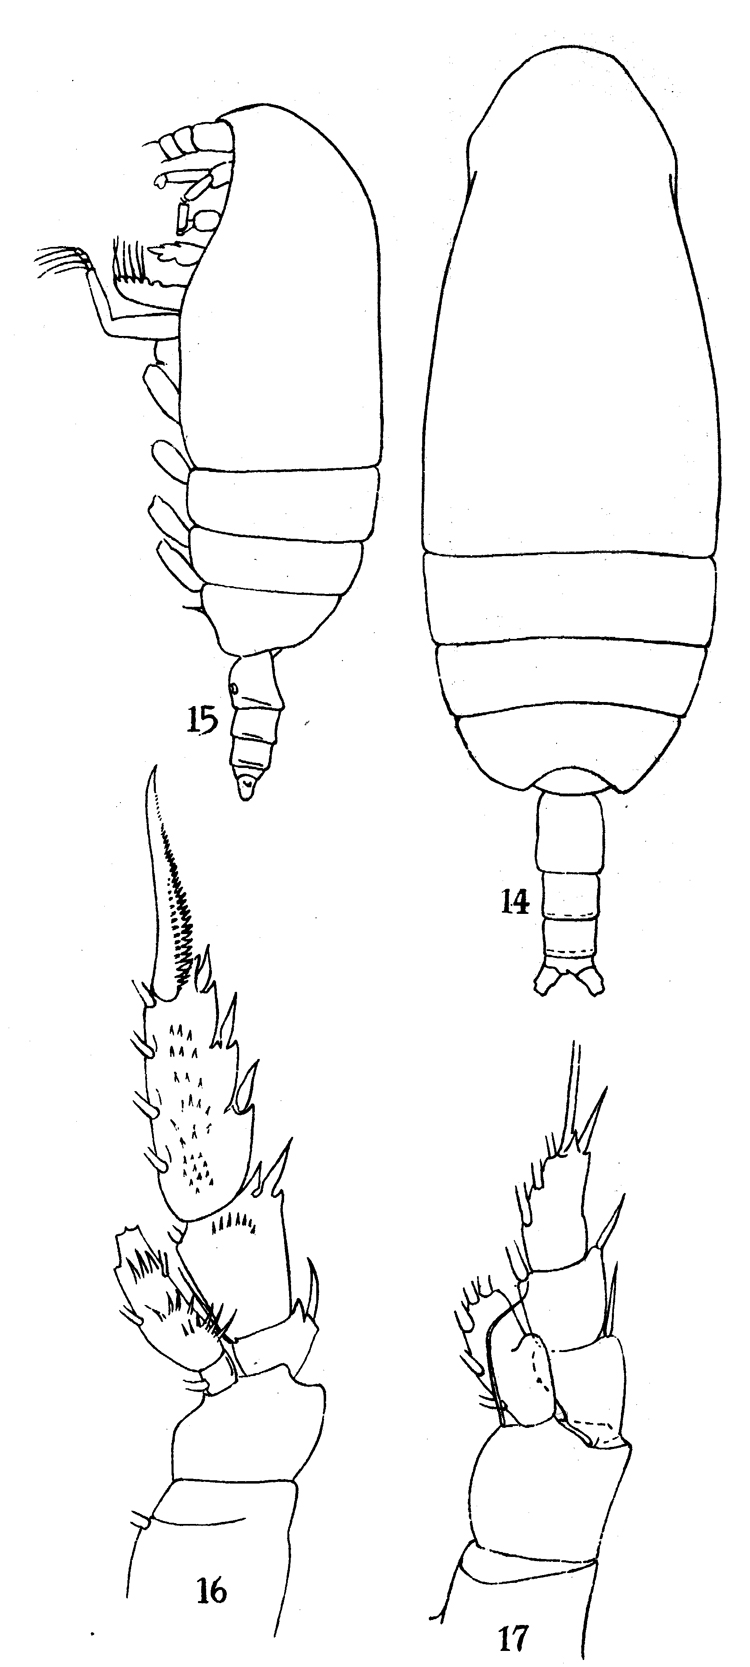 Espèce Amallothrix valida - Planche 8 de figures morphologiques